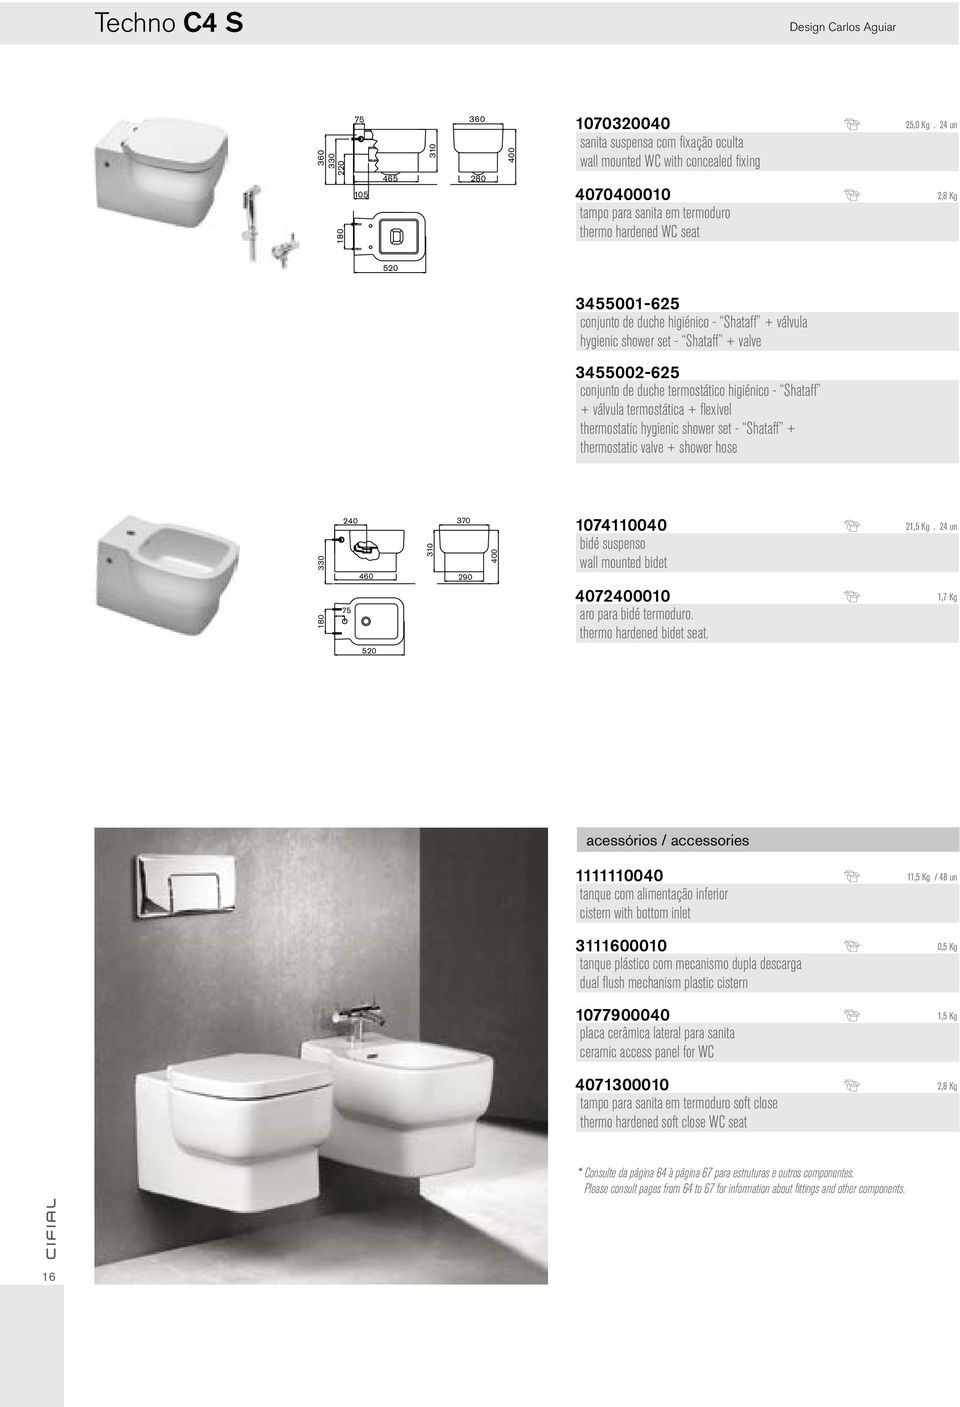 24 un 2,8 Kg 520 3455001- conjunto de duche higiénico - Shataff + válvula hygienic shower set - Shataff + valve 3455002- conjunto de duche termostático higiénico - Shataff + válvula termostática +